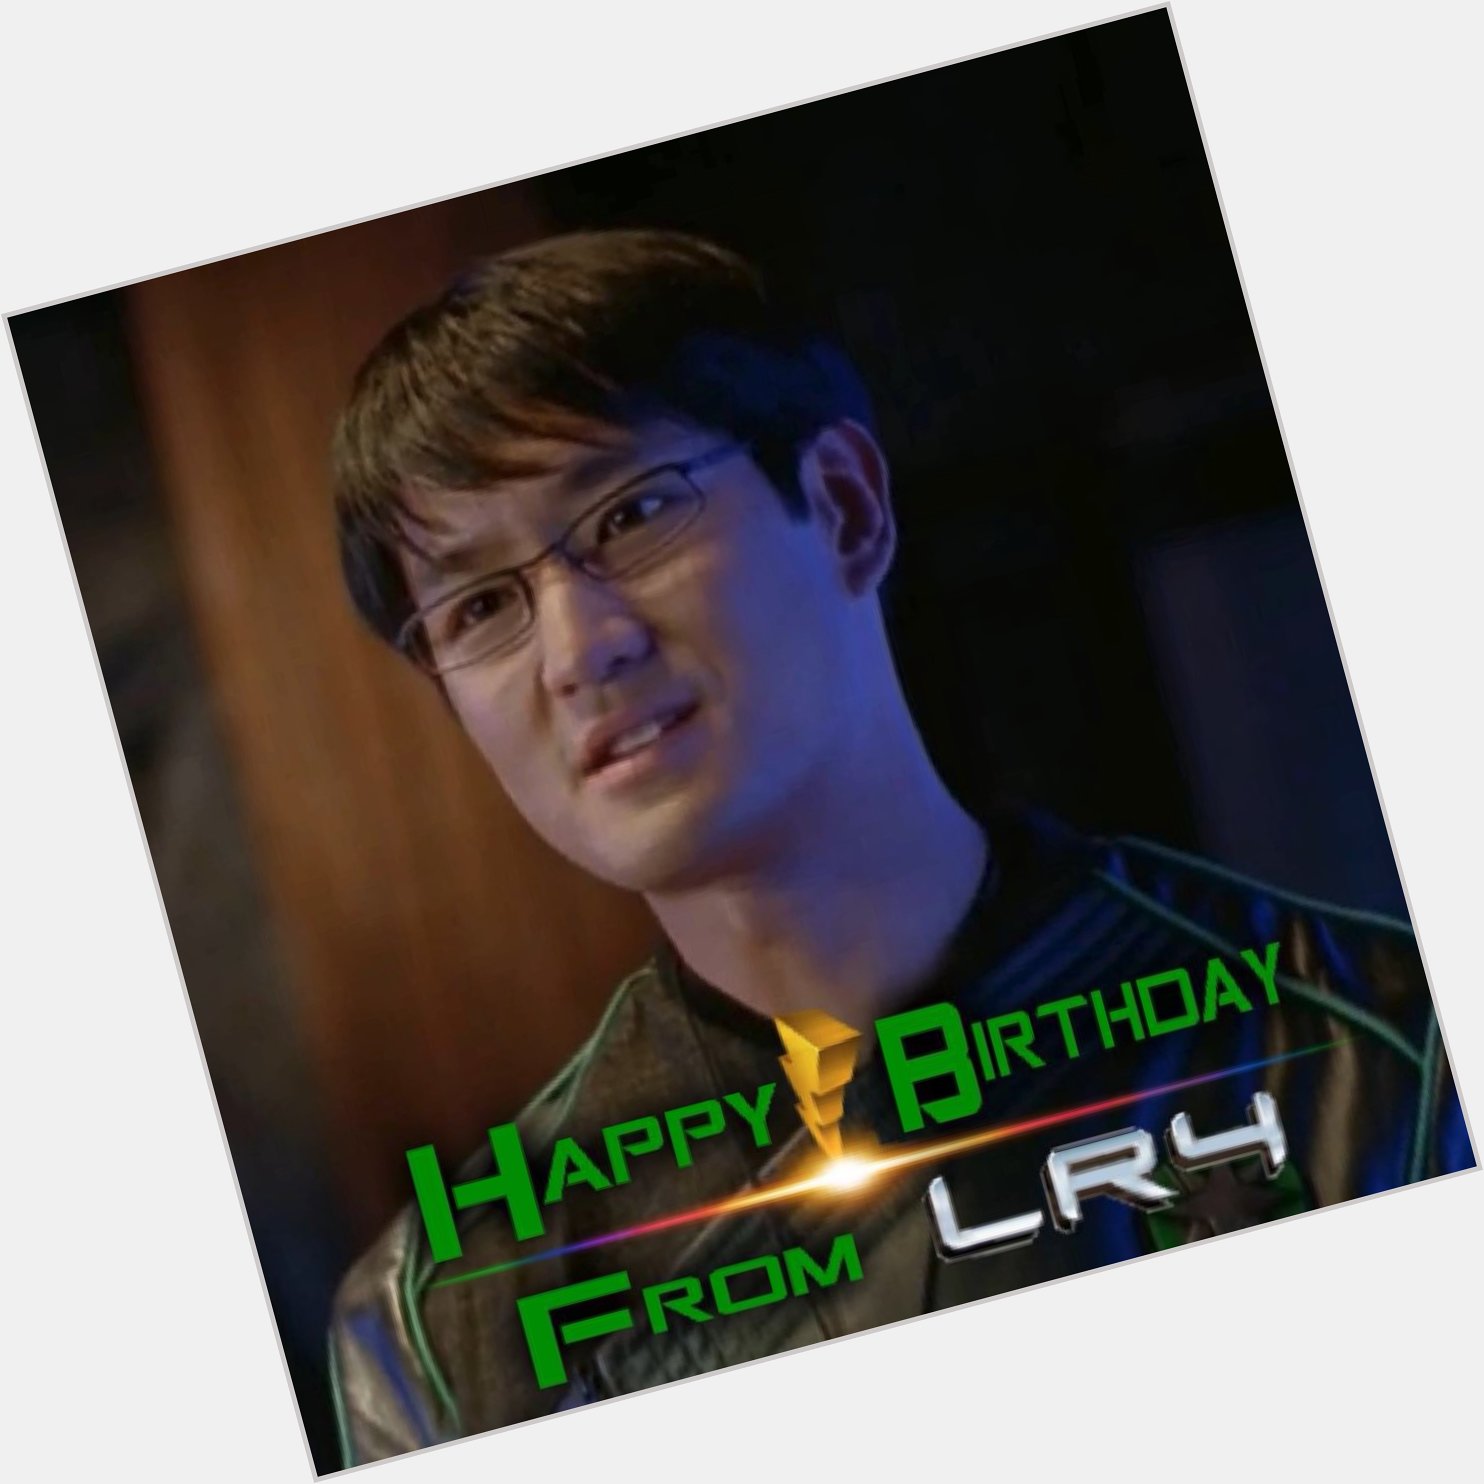 LR4 would like to wish Jason Chan a Happy Birthday! 